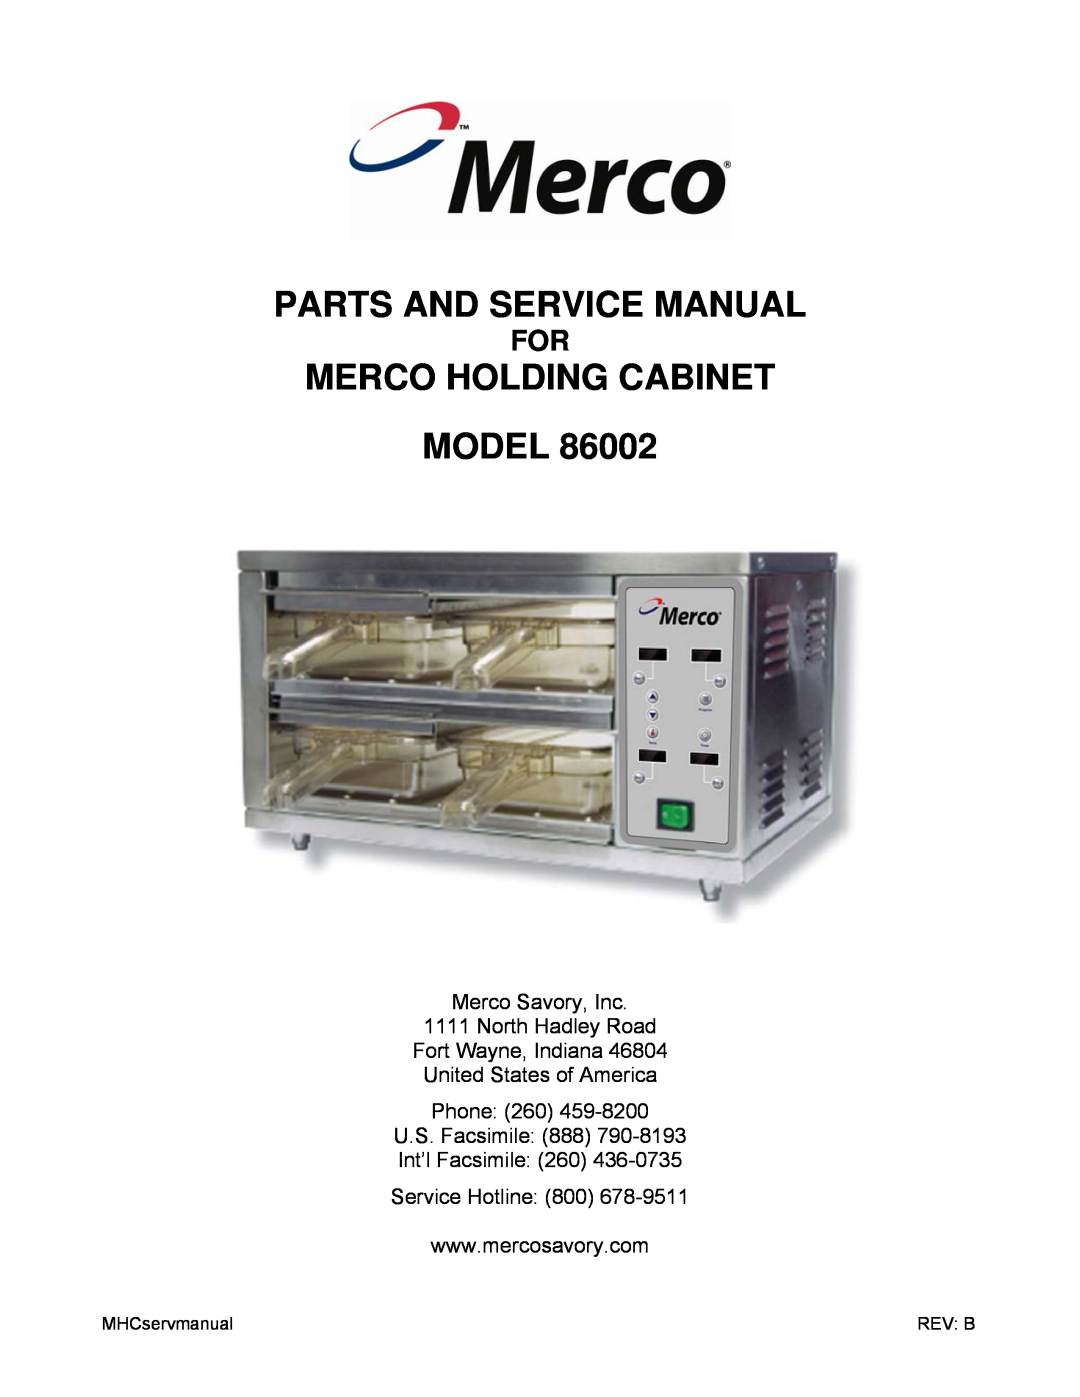 Merco Savory 86002 service manual Merco Holding Cabinet Model 